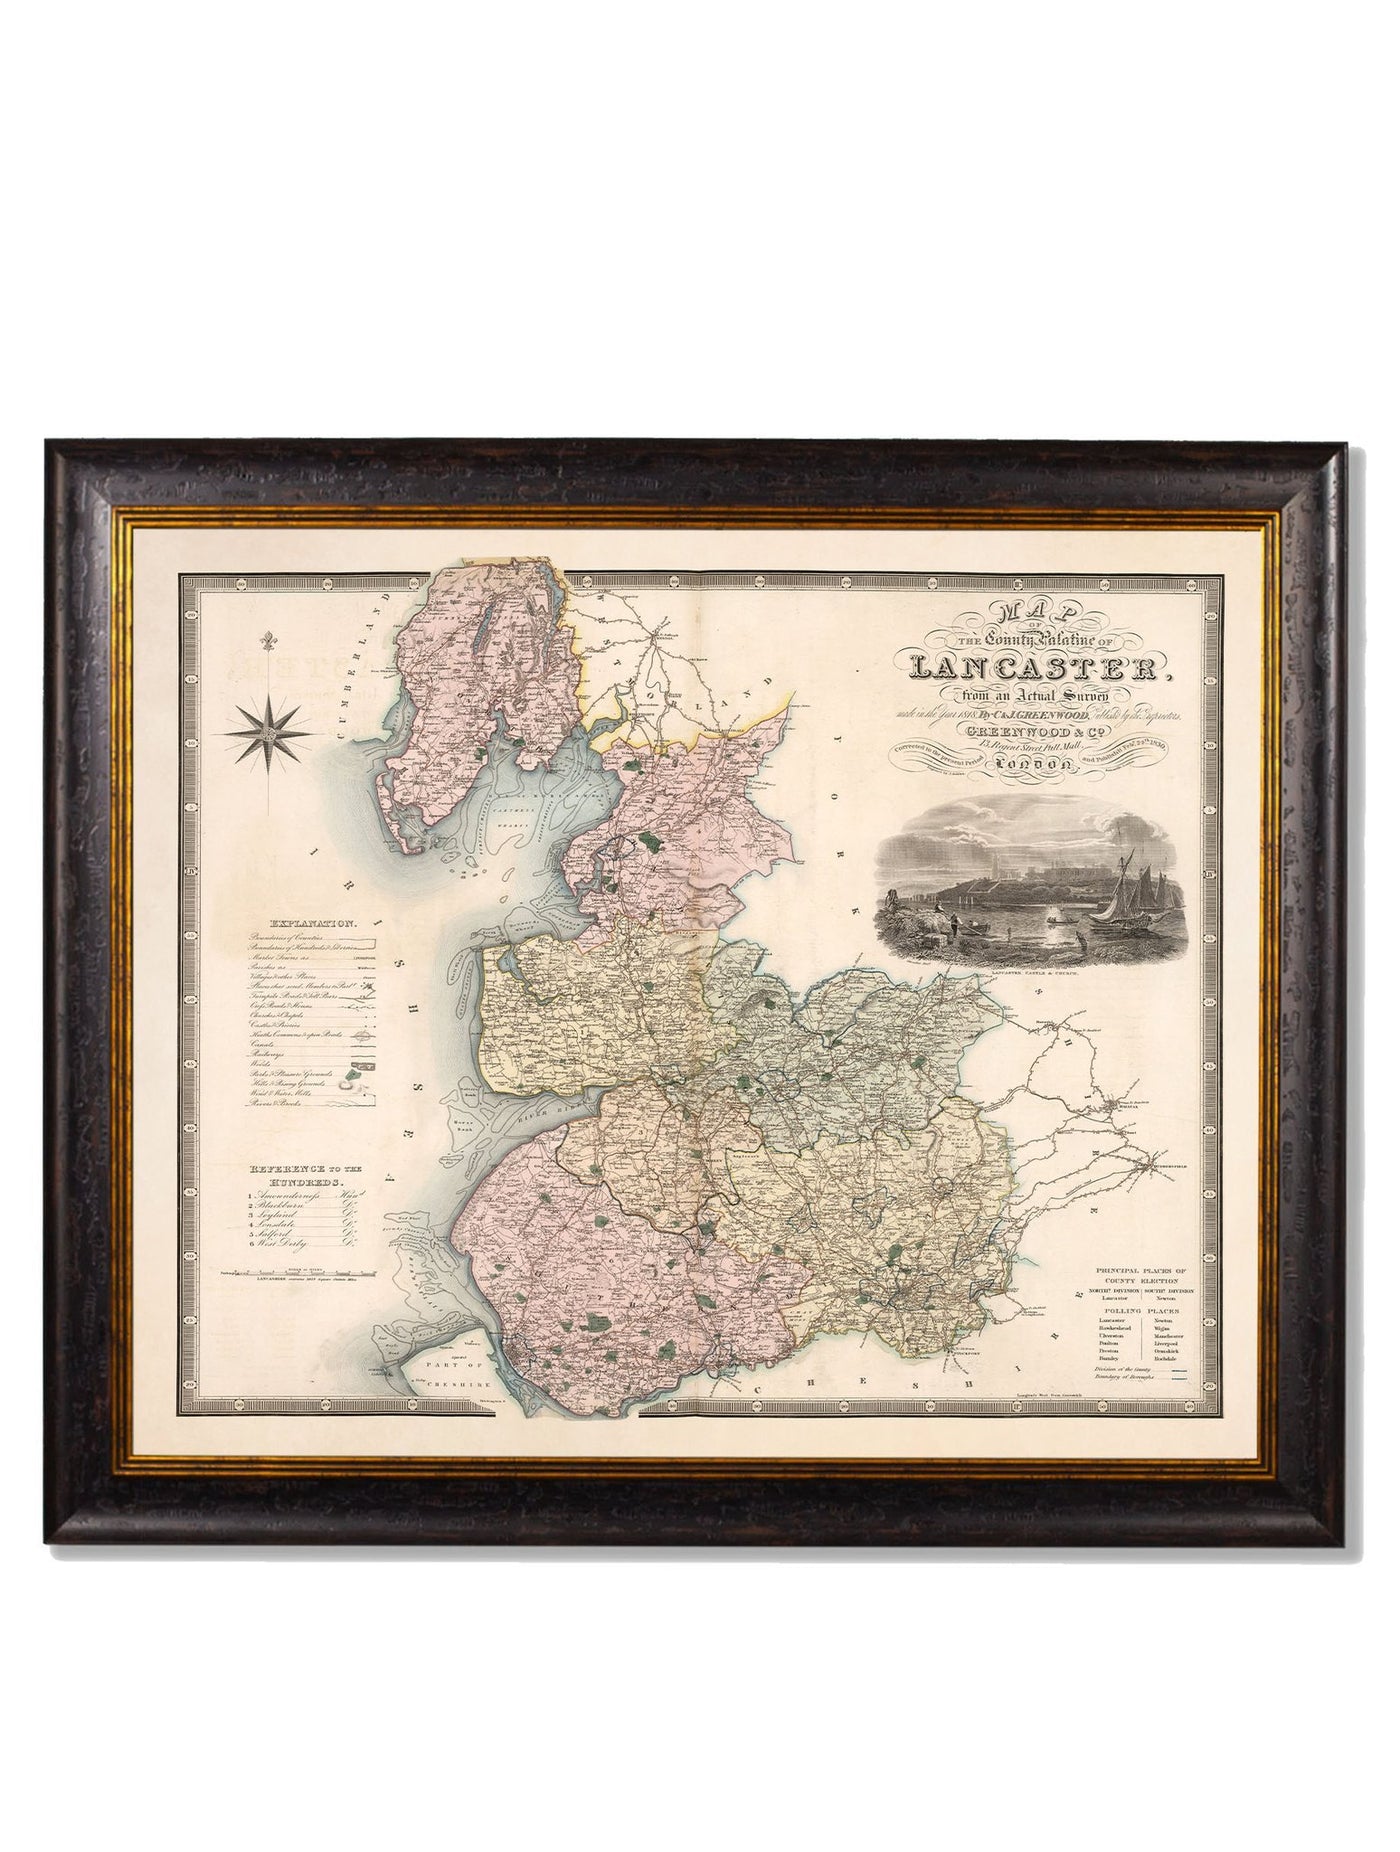 County Maps 1830